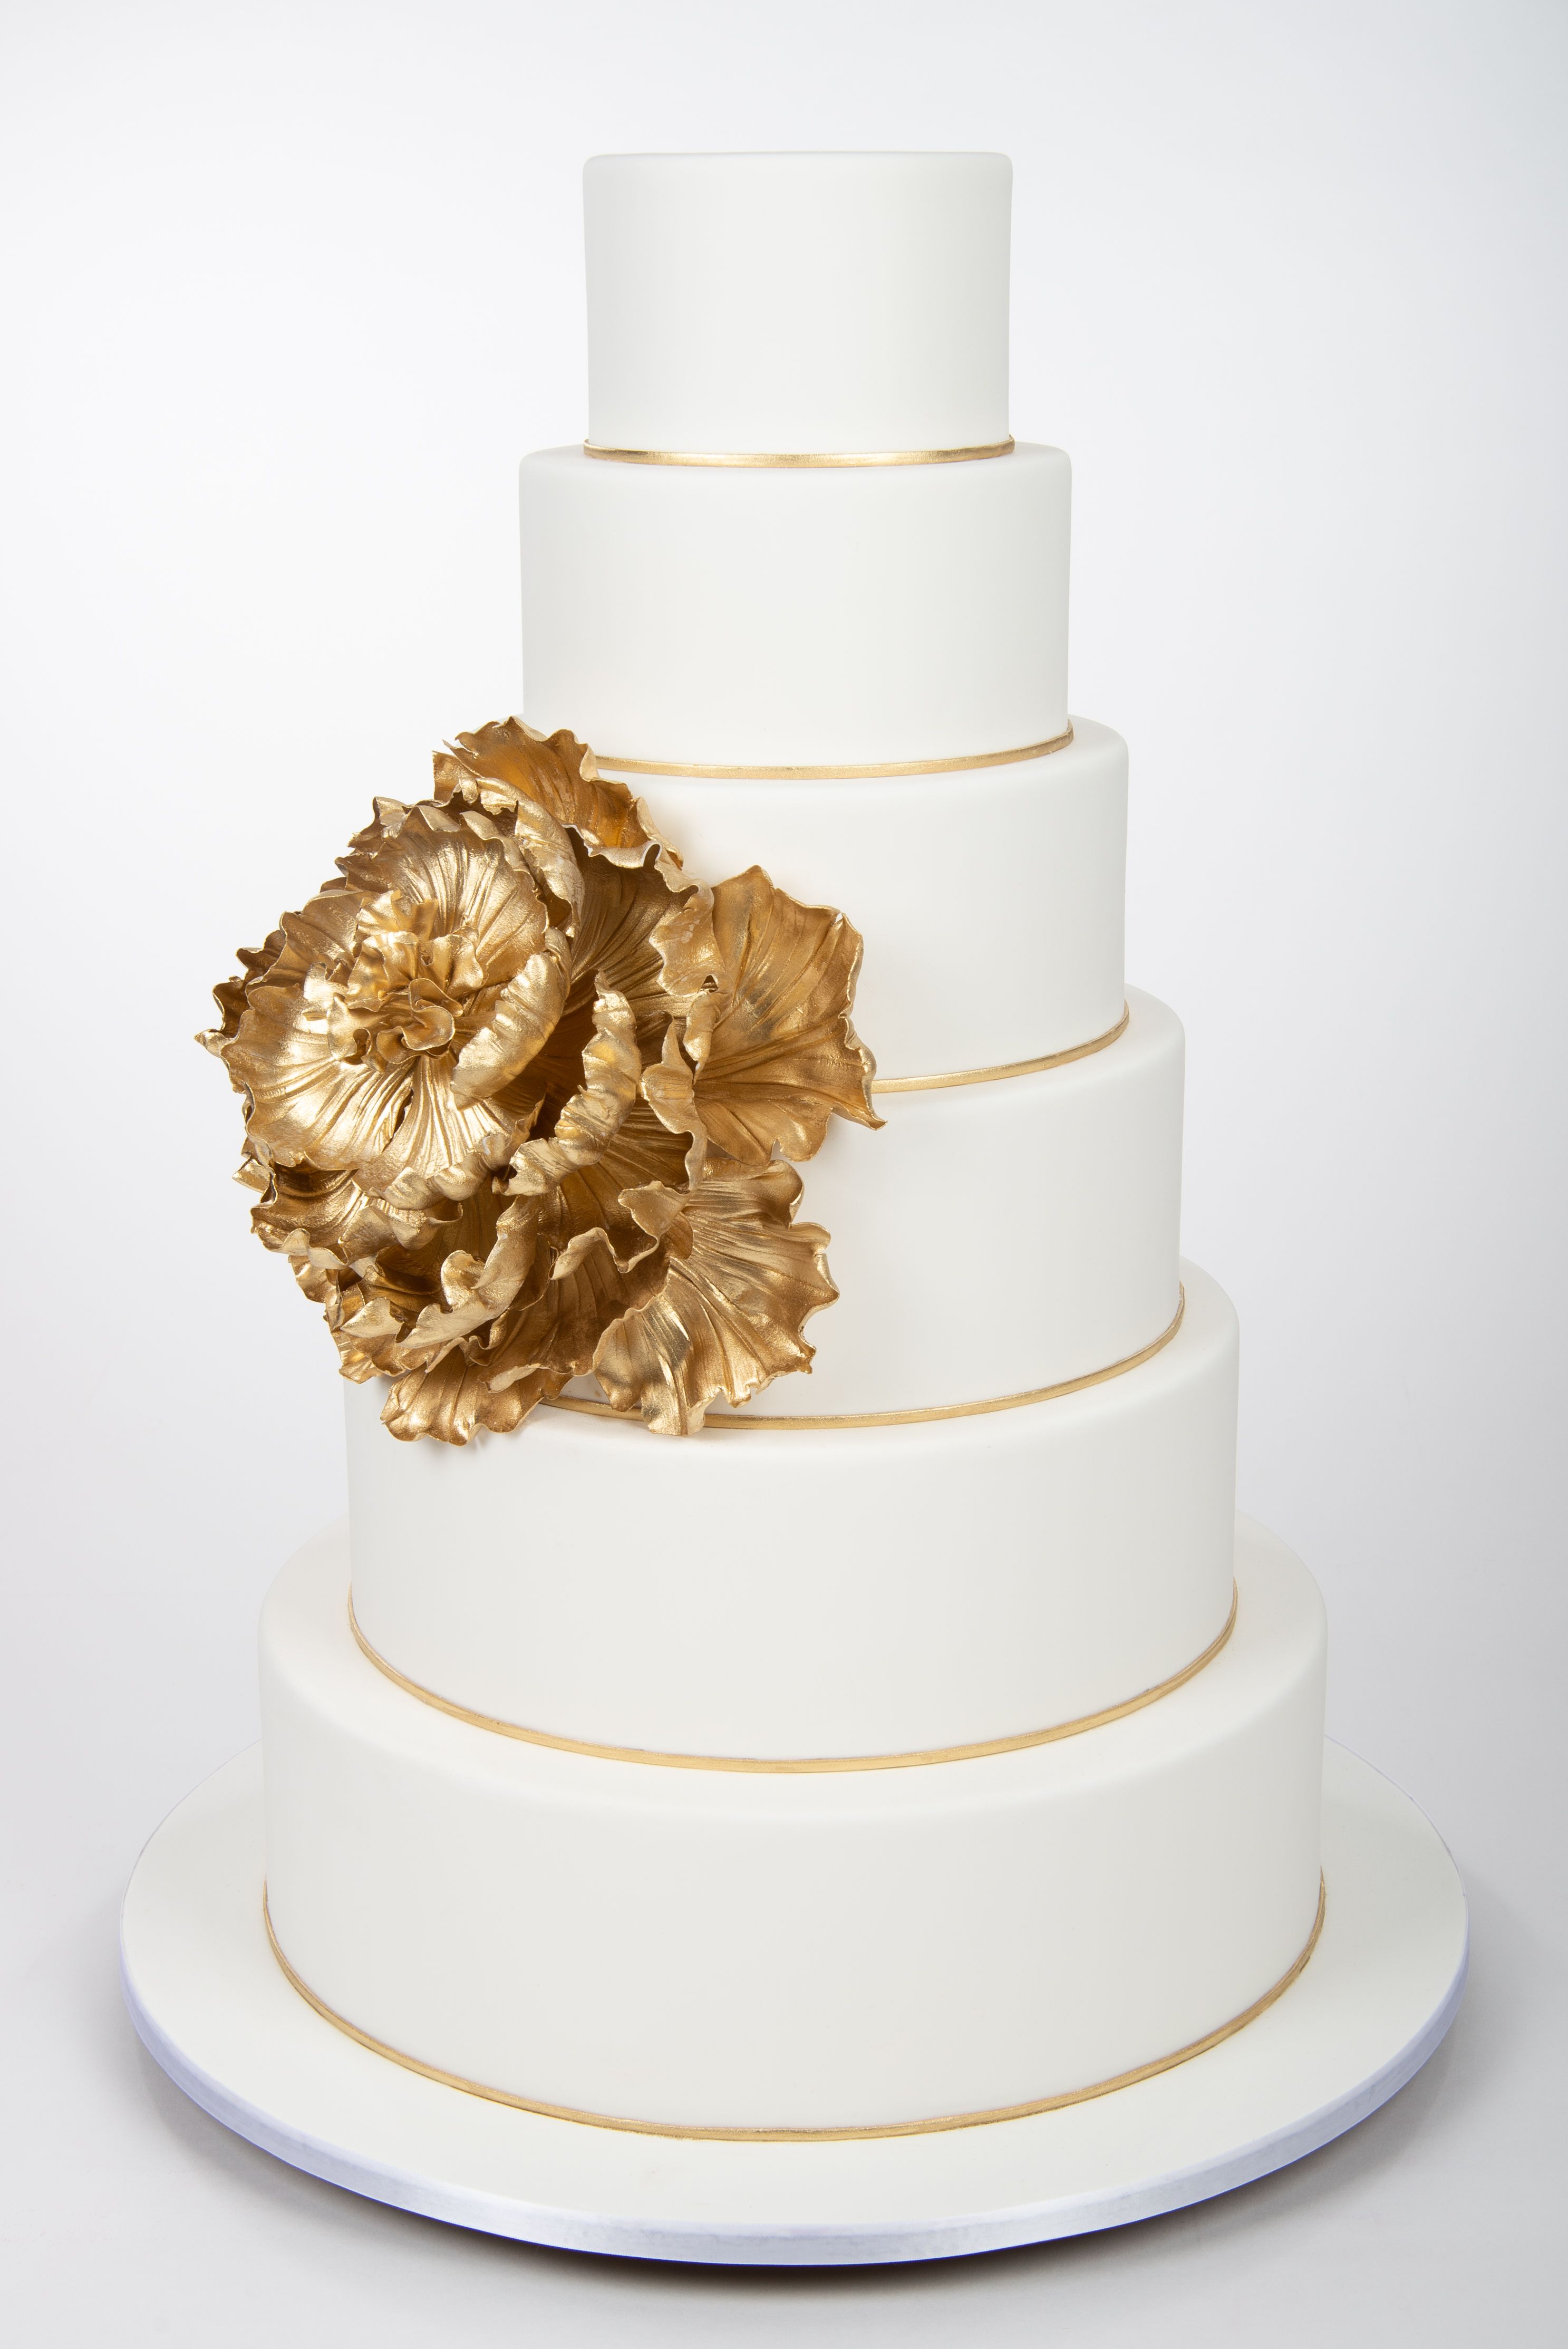 Wedding Cakes: Fondant or Buttercream? - Arkansas Bride